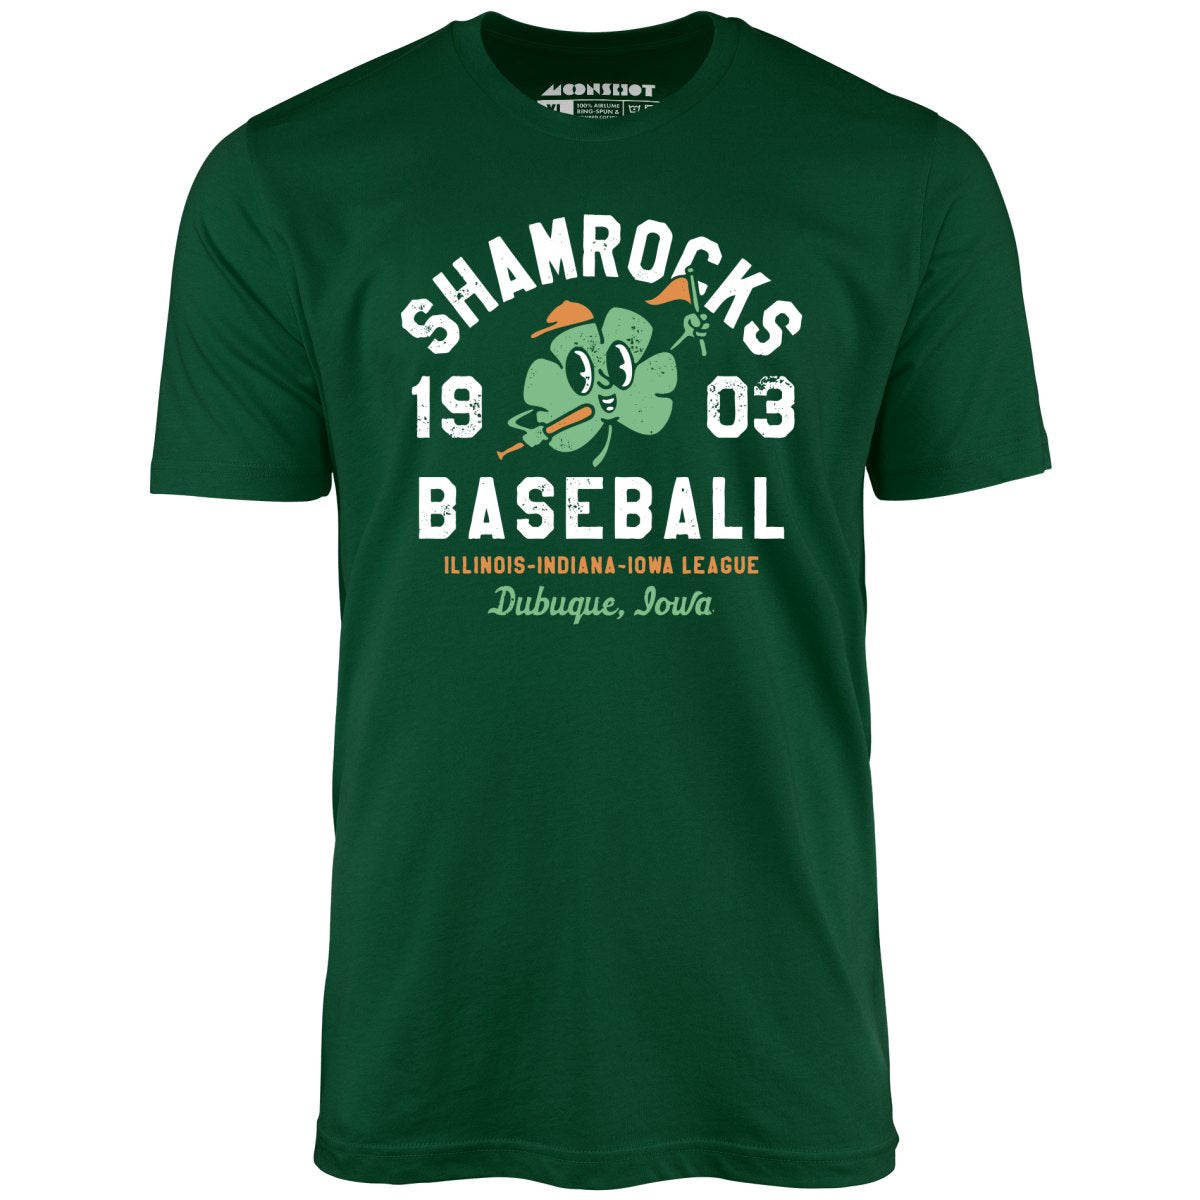 Dubuque Shamrocks - Iowa - Vintage Defunct Baseball Teams - Unisex T-Shirt